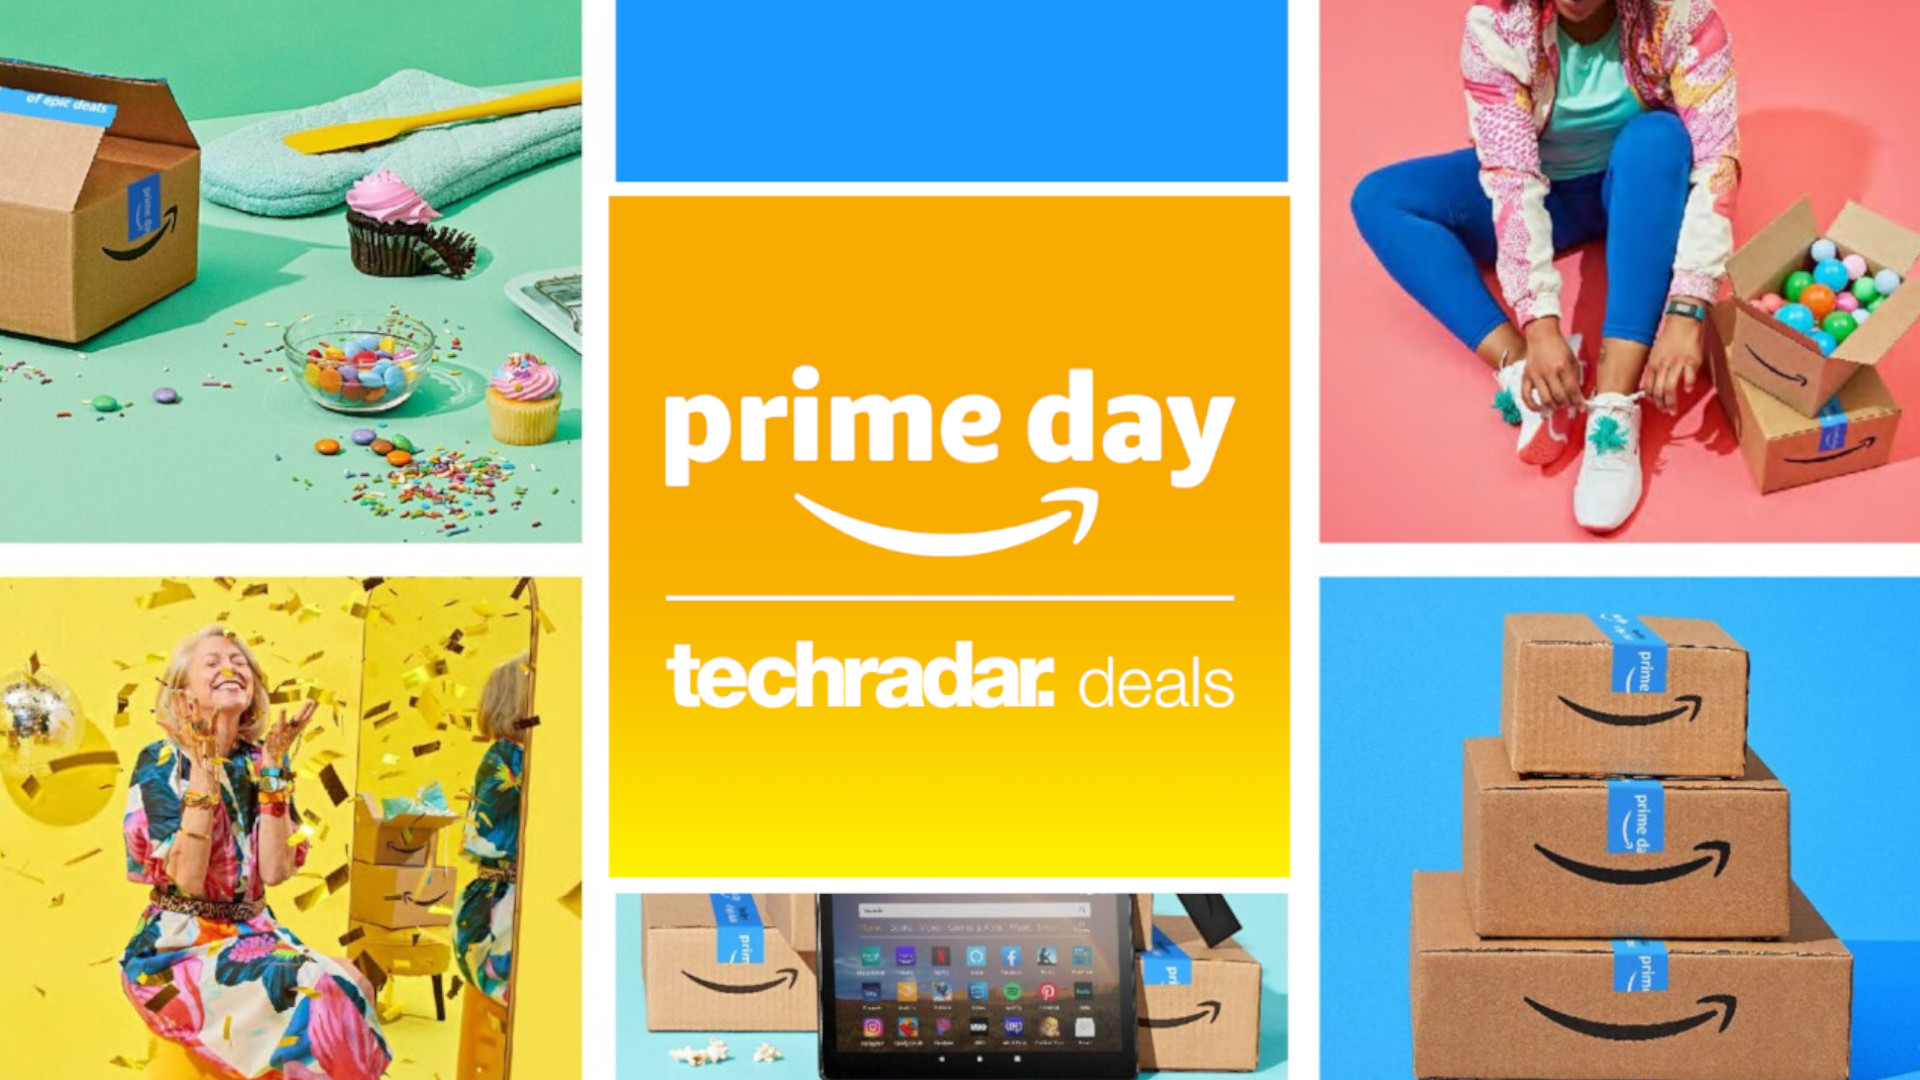 Amazon Prime Day banner image with TechRadar logo super-imposed